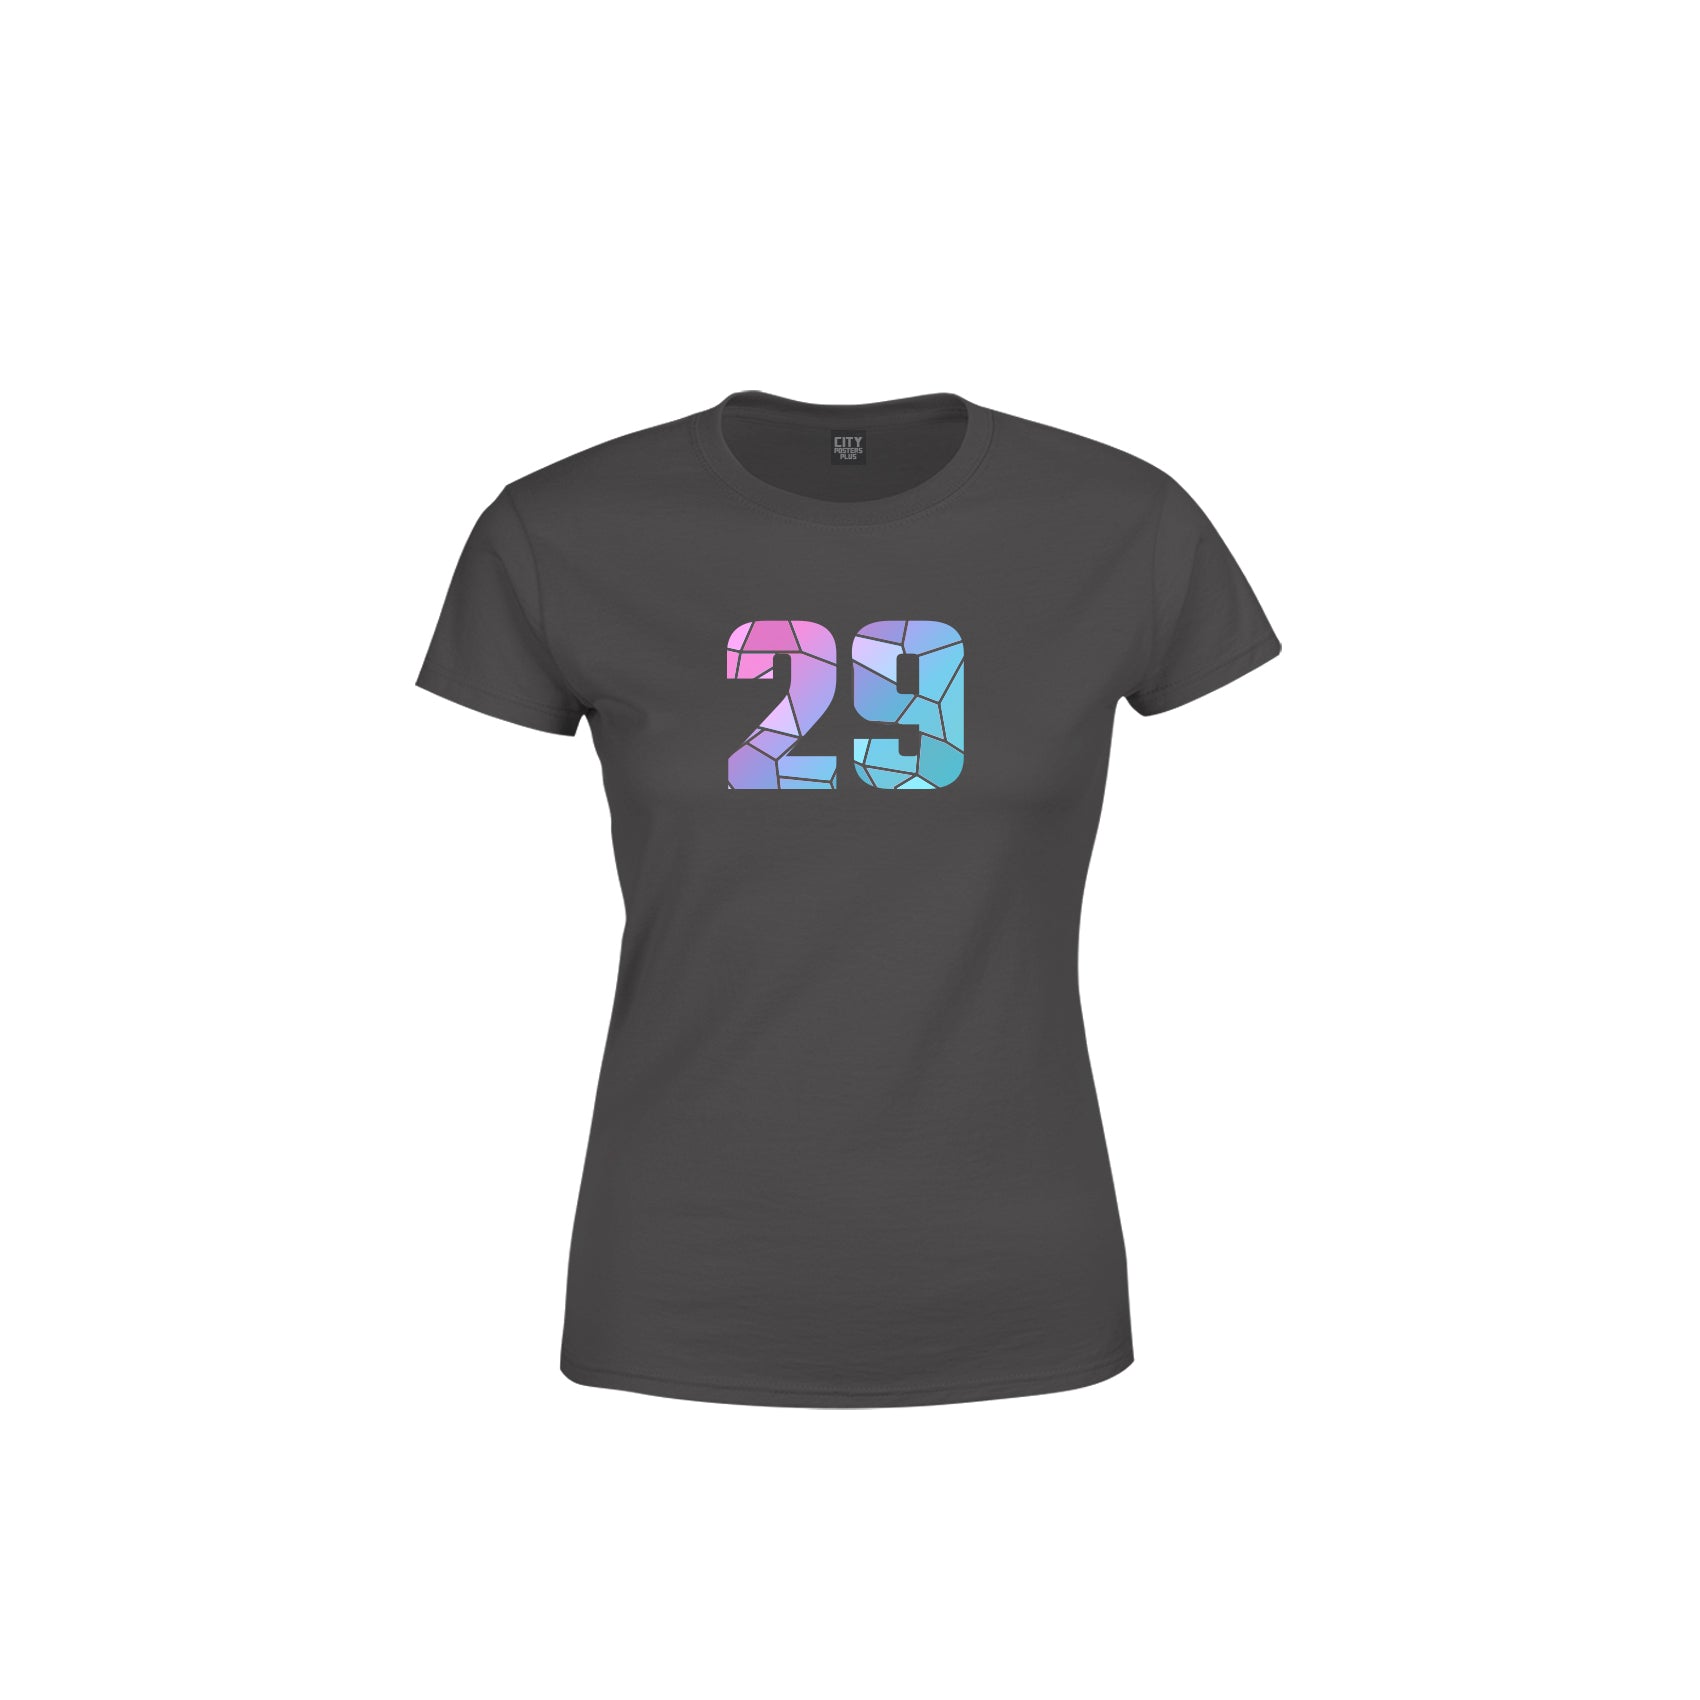 29 Number Women's T-Shirt (Charcoal Grey)